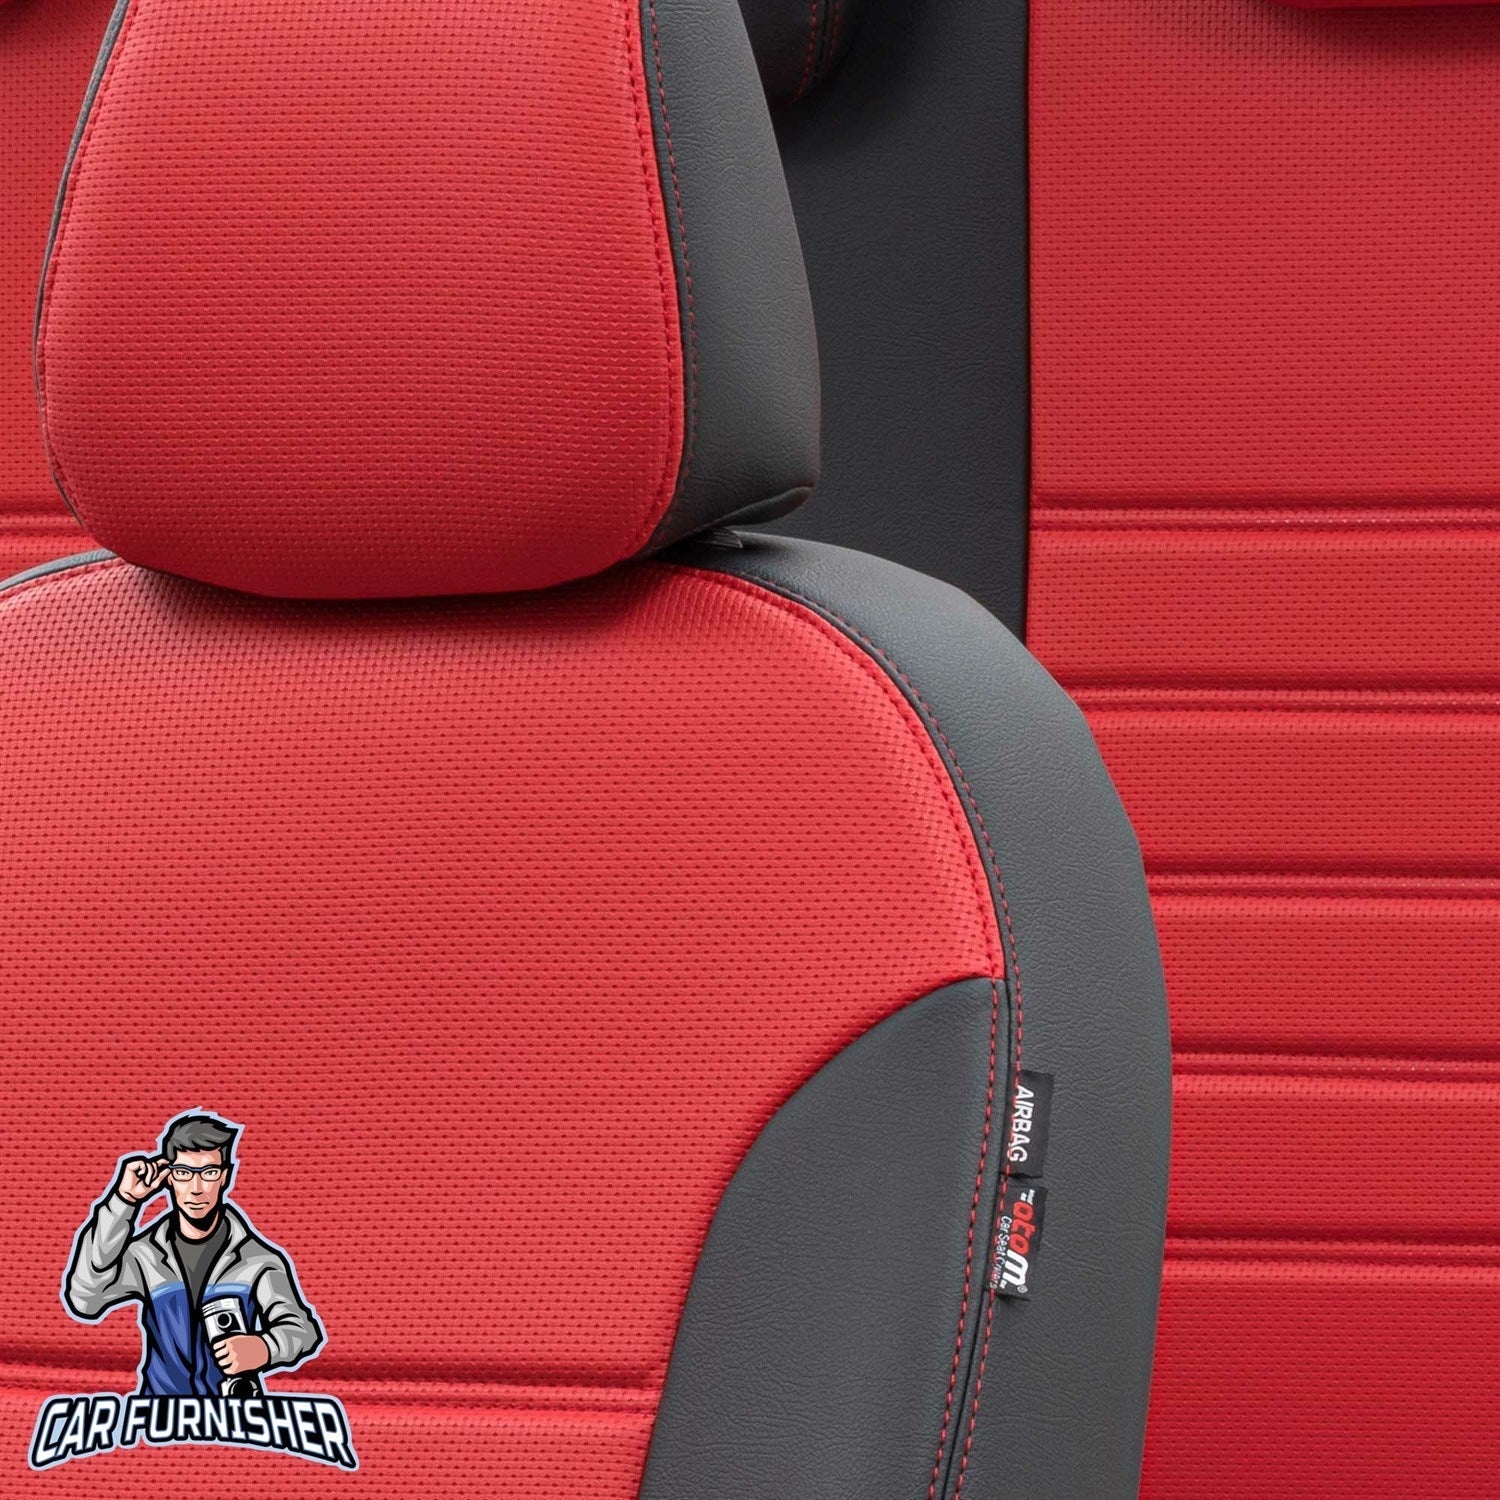 Suzuki Alto Seat Covers New York Leather Design Red Leather